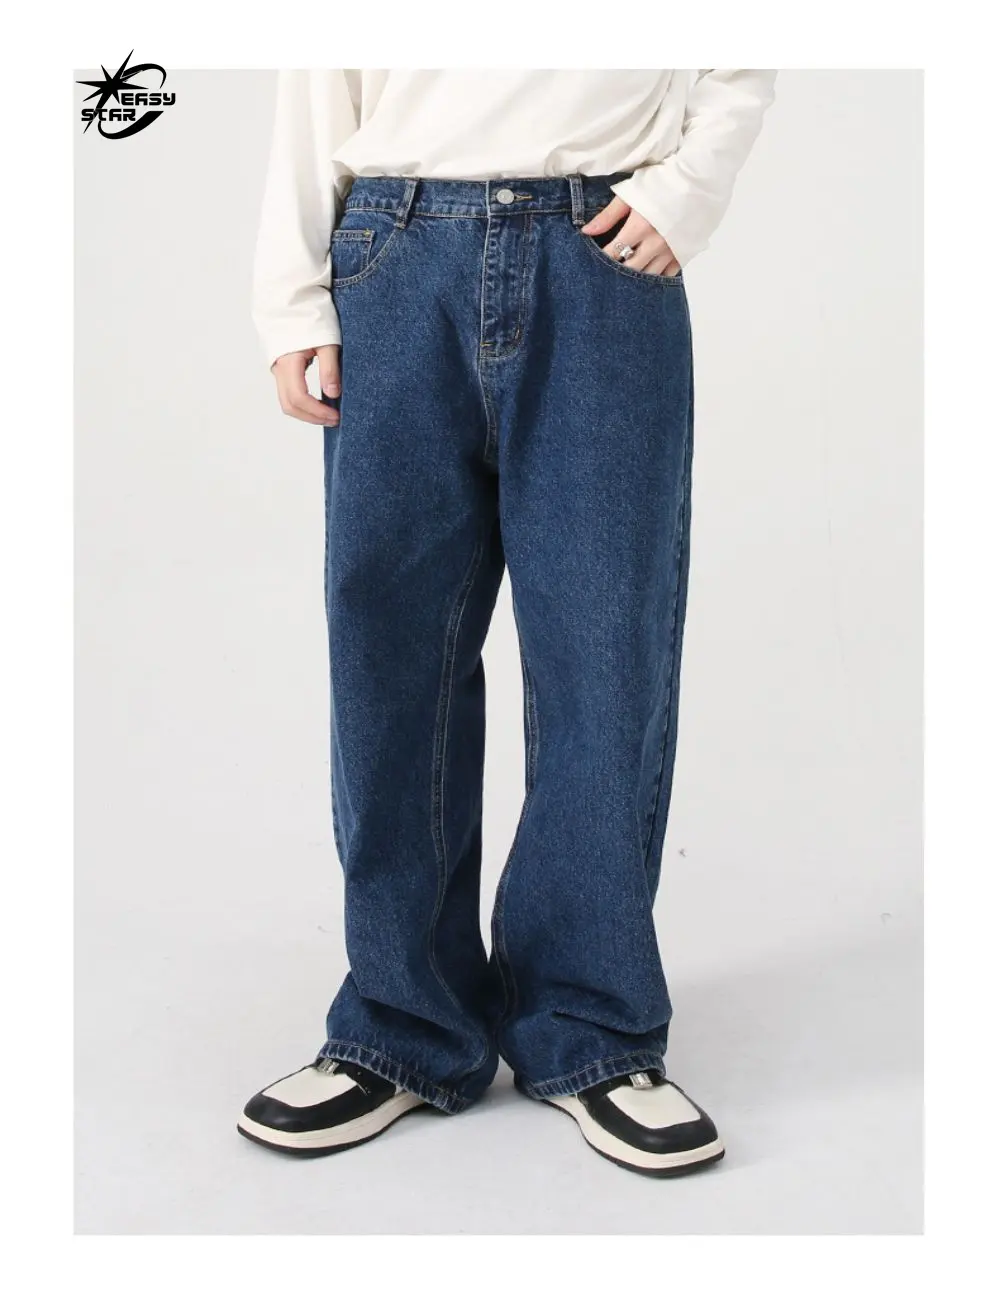 Maden niedriger Preis Jeans Herren Selvedge Denim Jeans dunkelblau retro klassisch Slim gerade Herrenhosen konische Hosen Baumwolle individuell